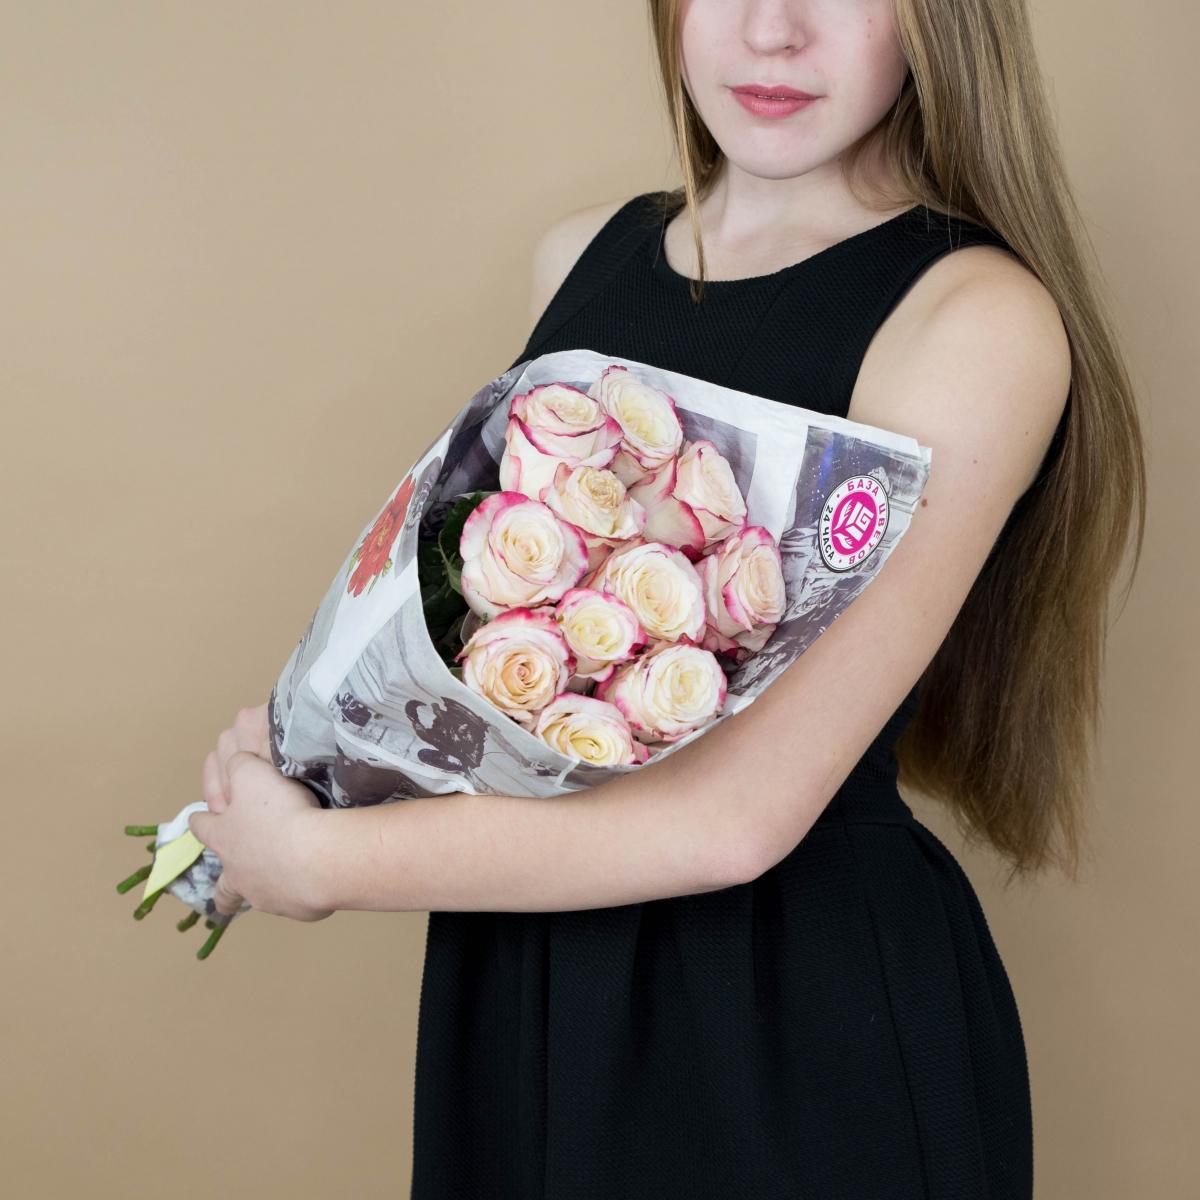 Розы красно-белые 11 шт. (40 см) Артикул - 16337